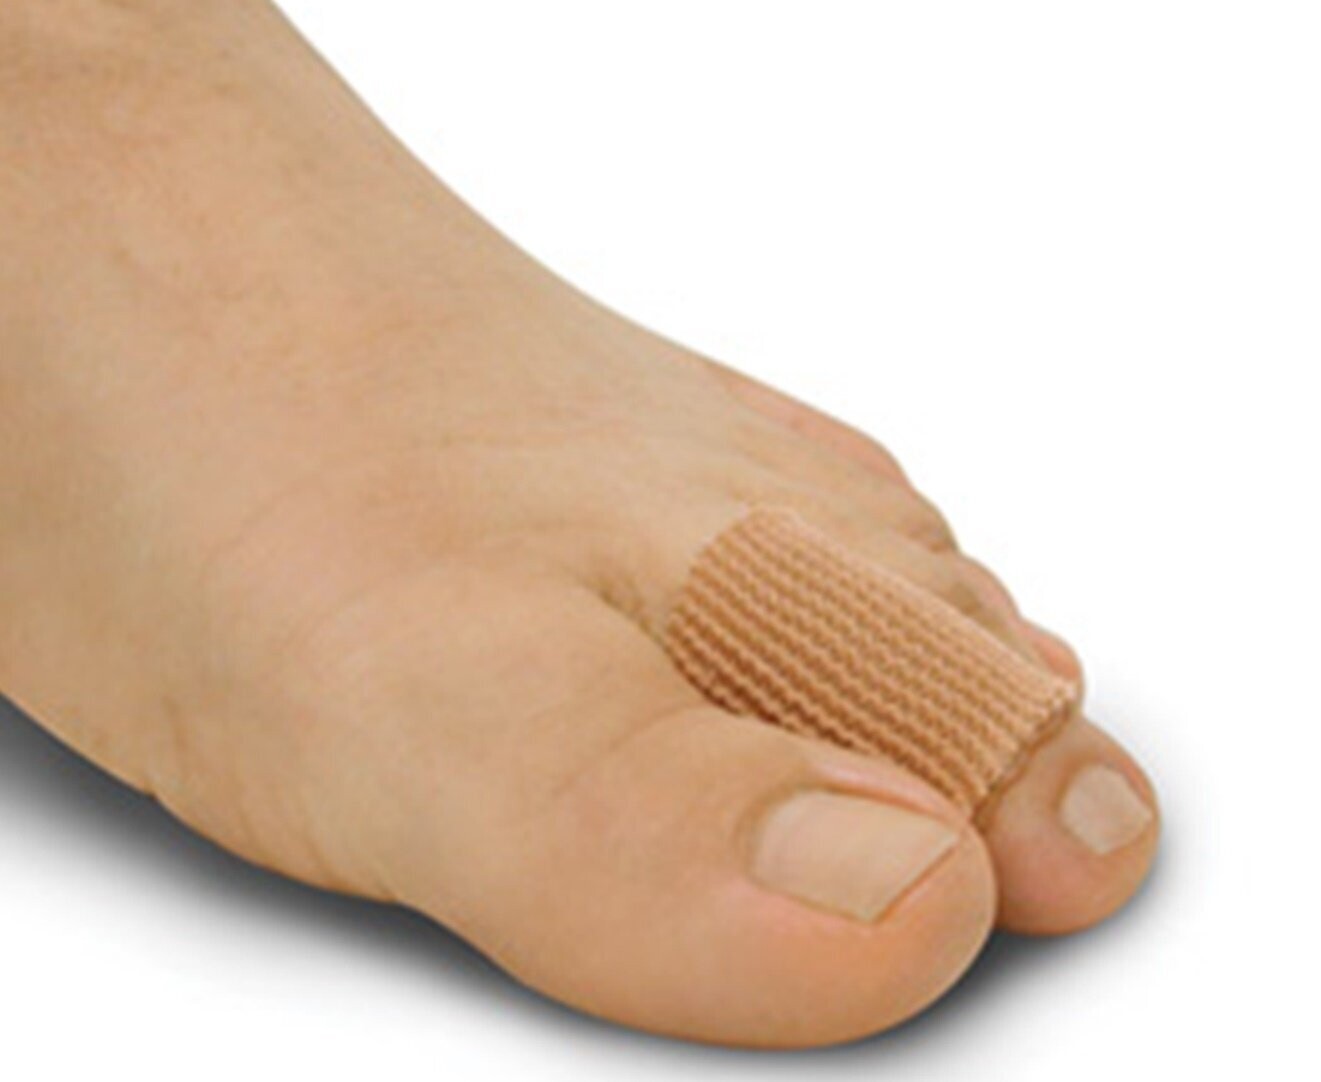 DIGI TUBE 1" Professional Foot Care LARGE